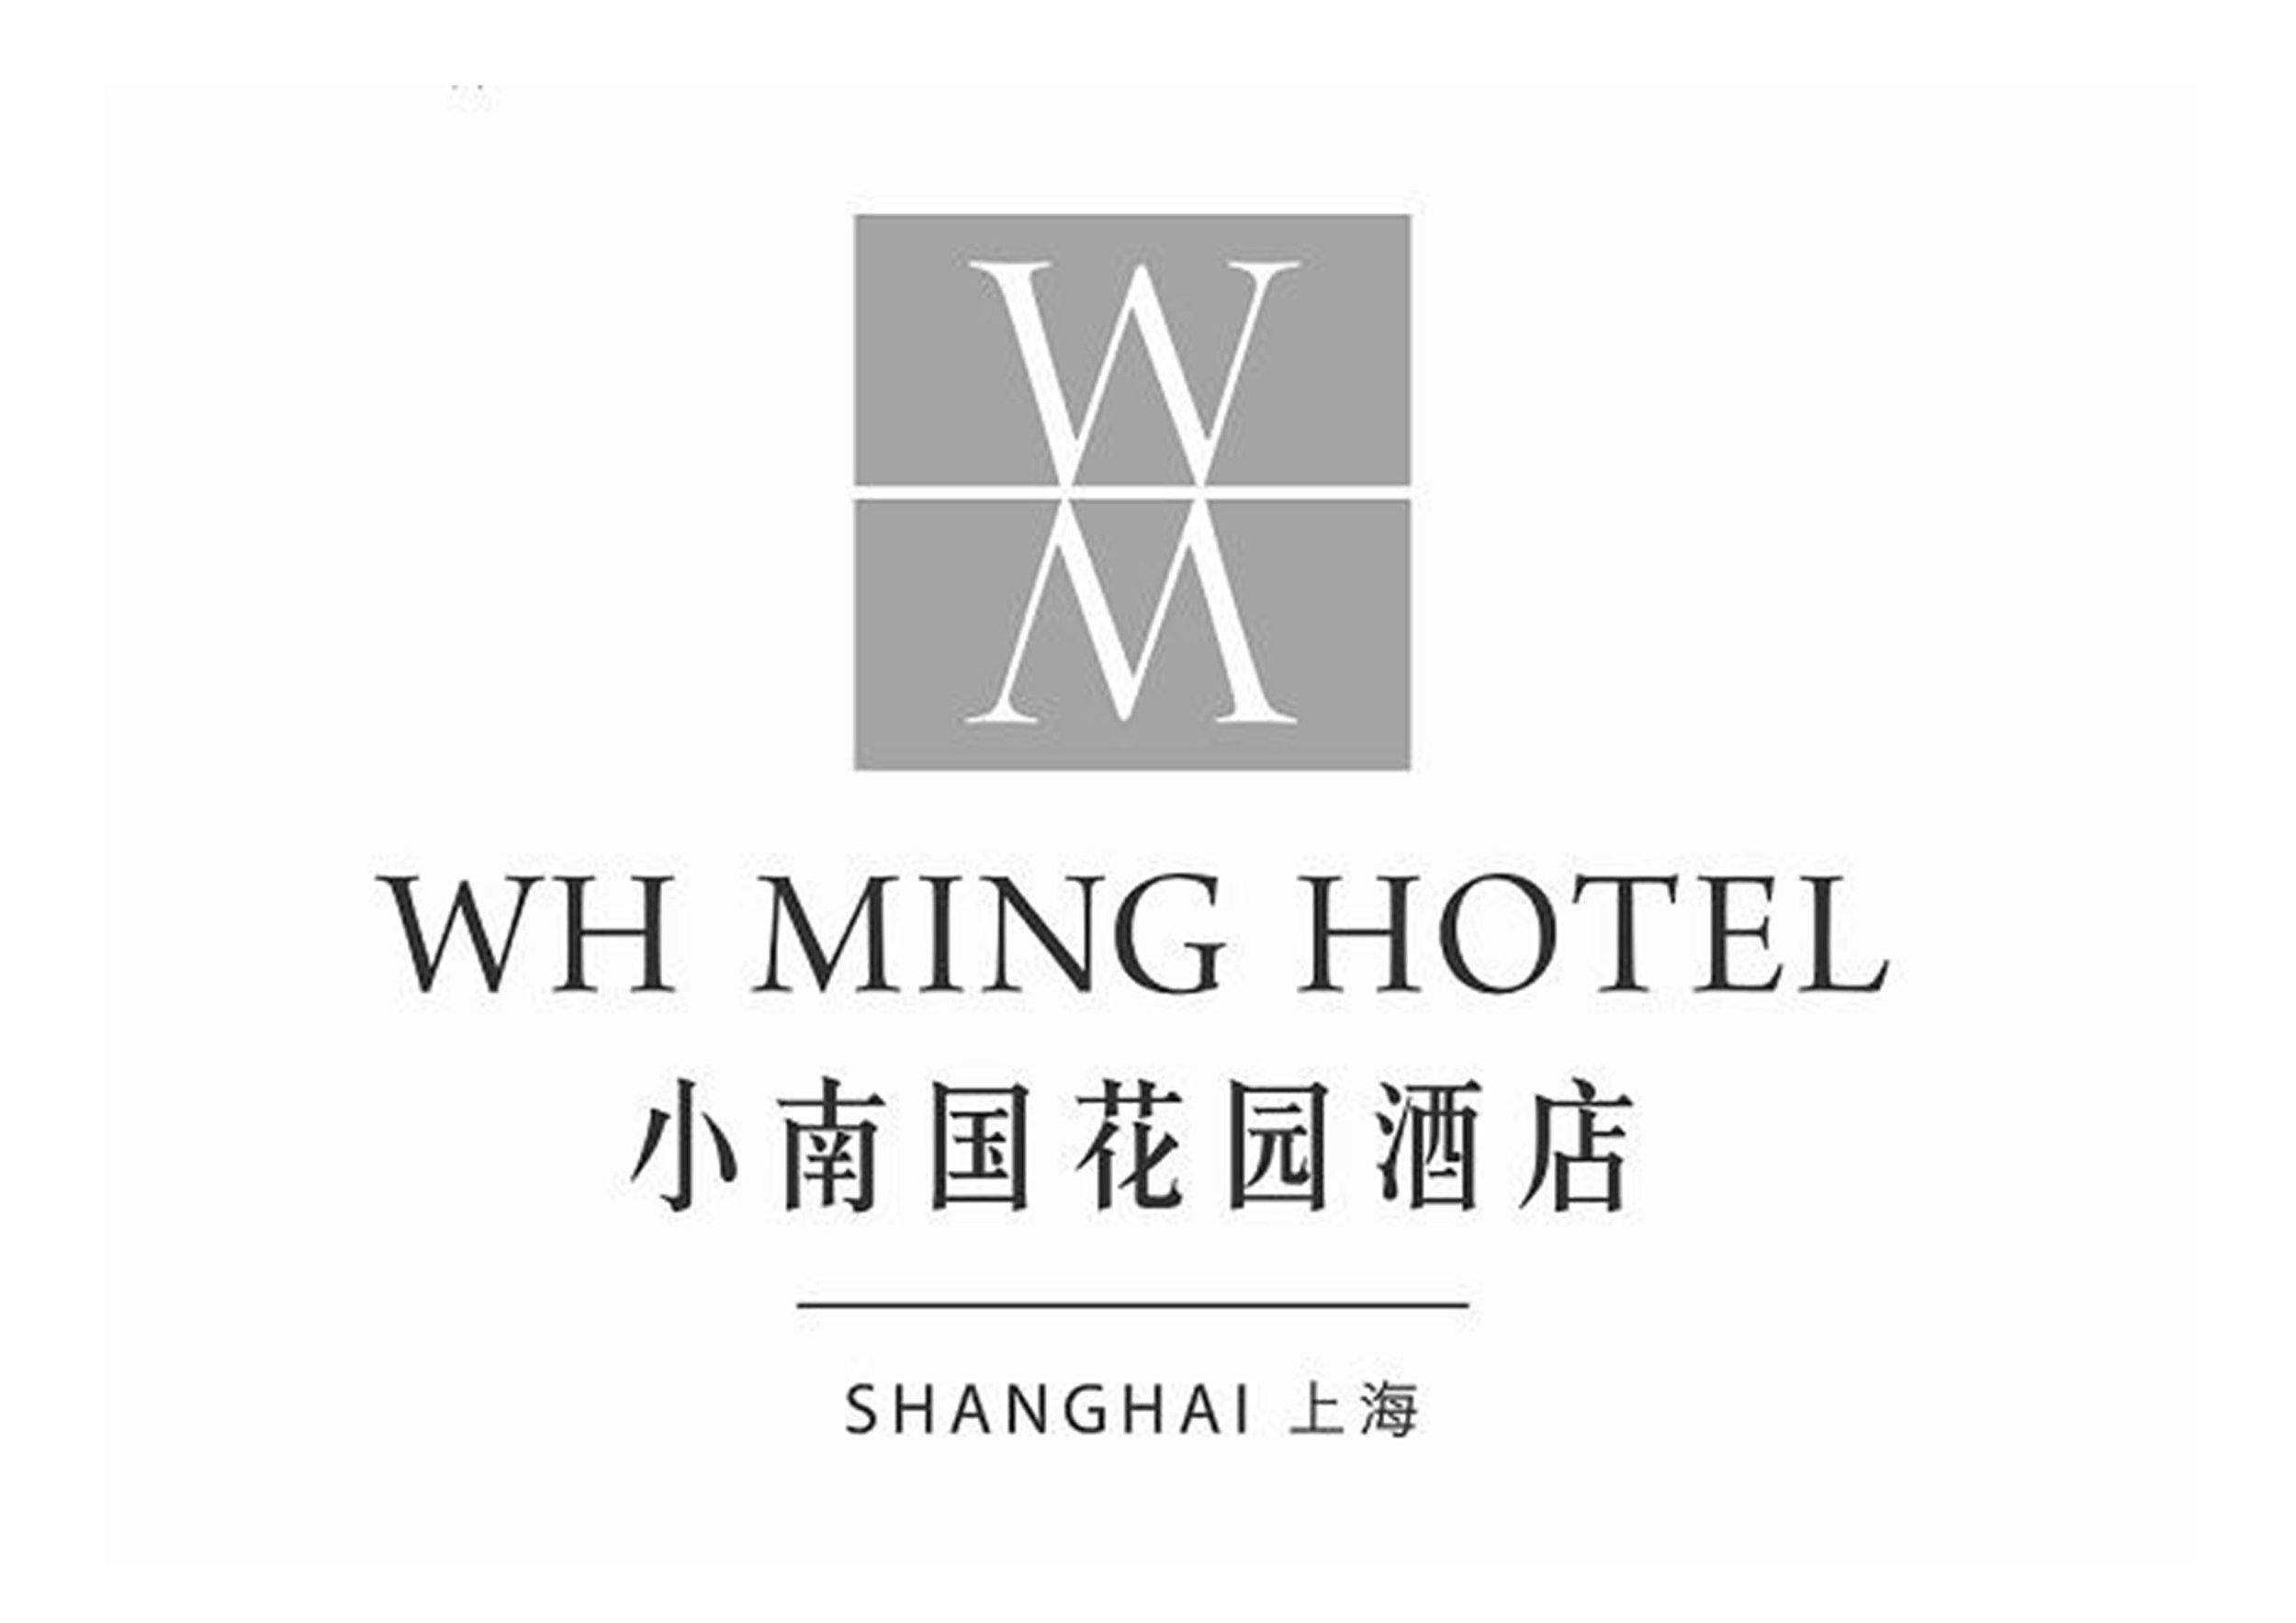  ..  WH Ming Hotel China 